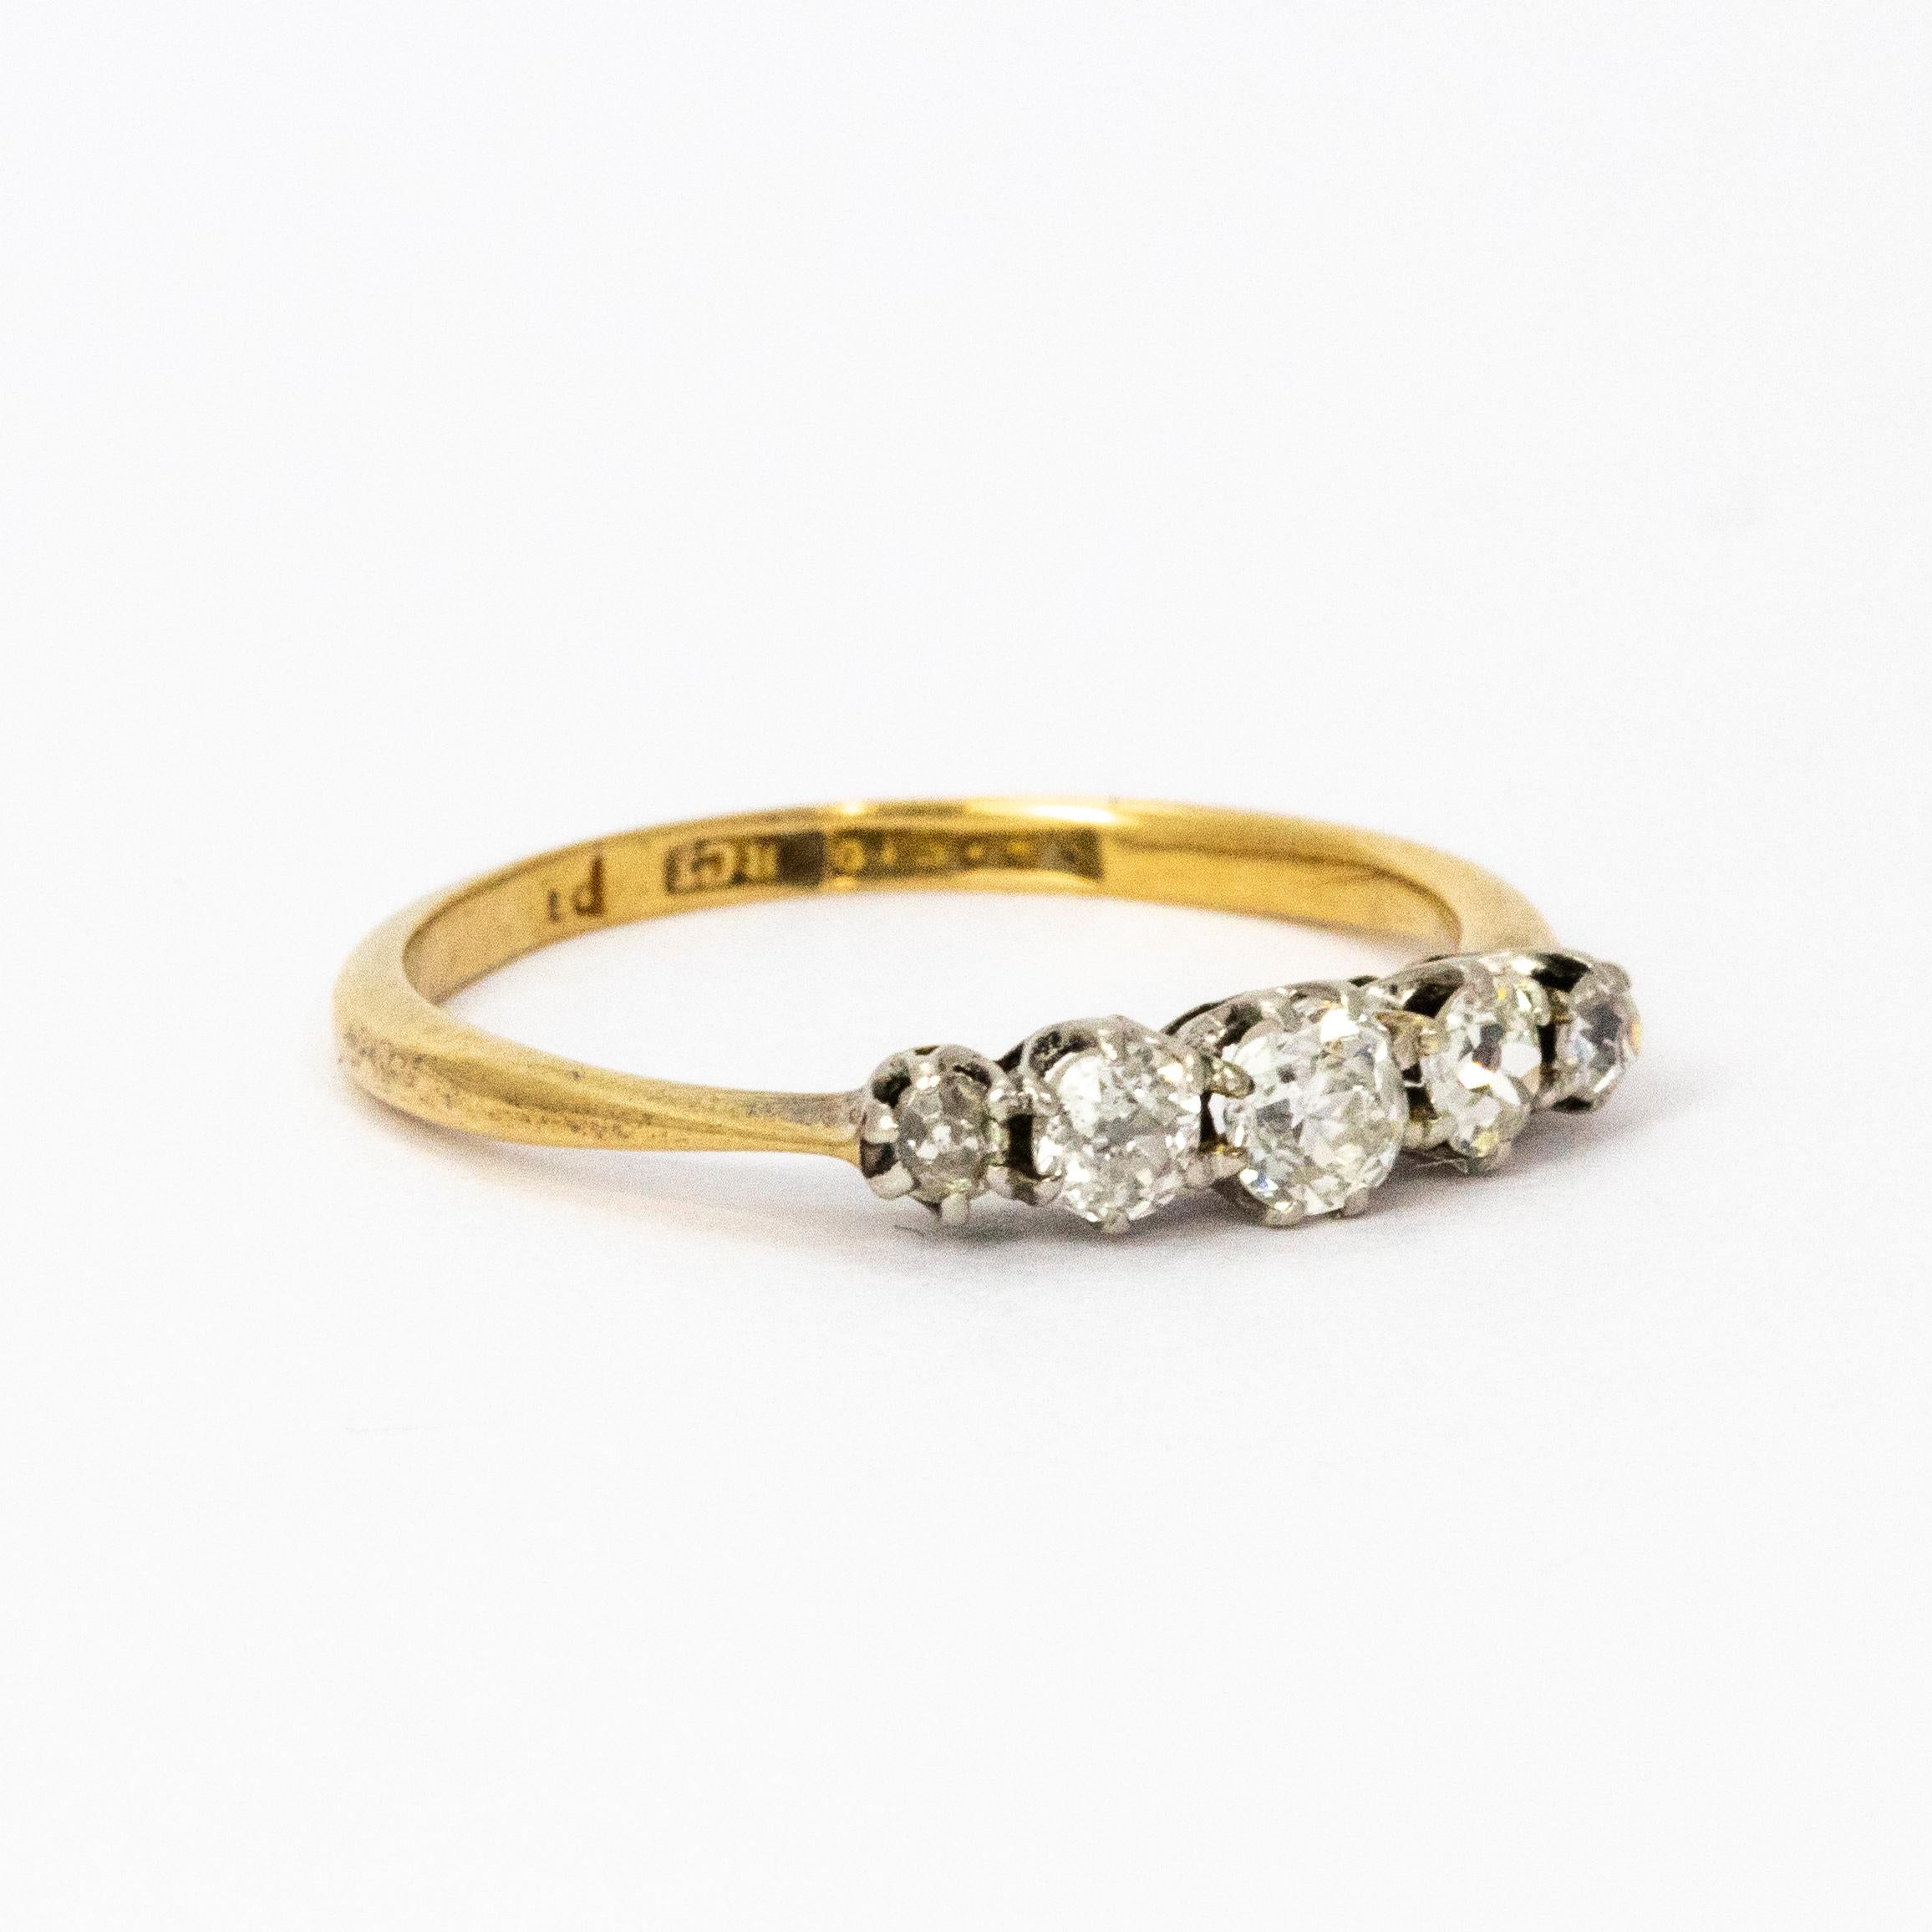 1.5 carat 5 stone diamond ring